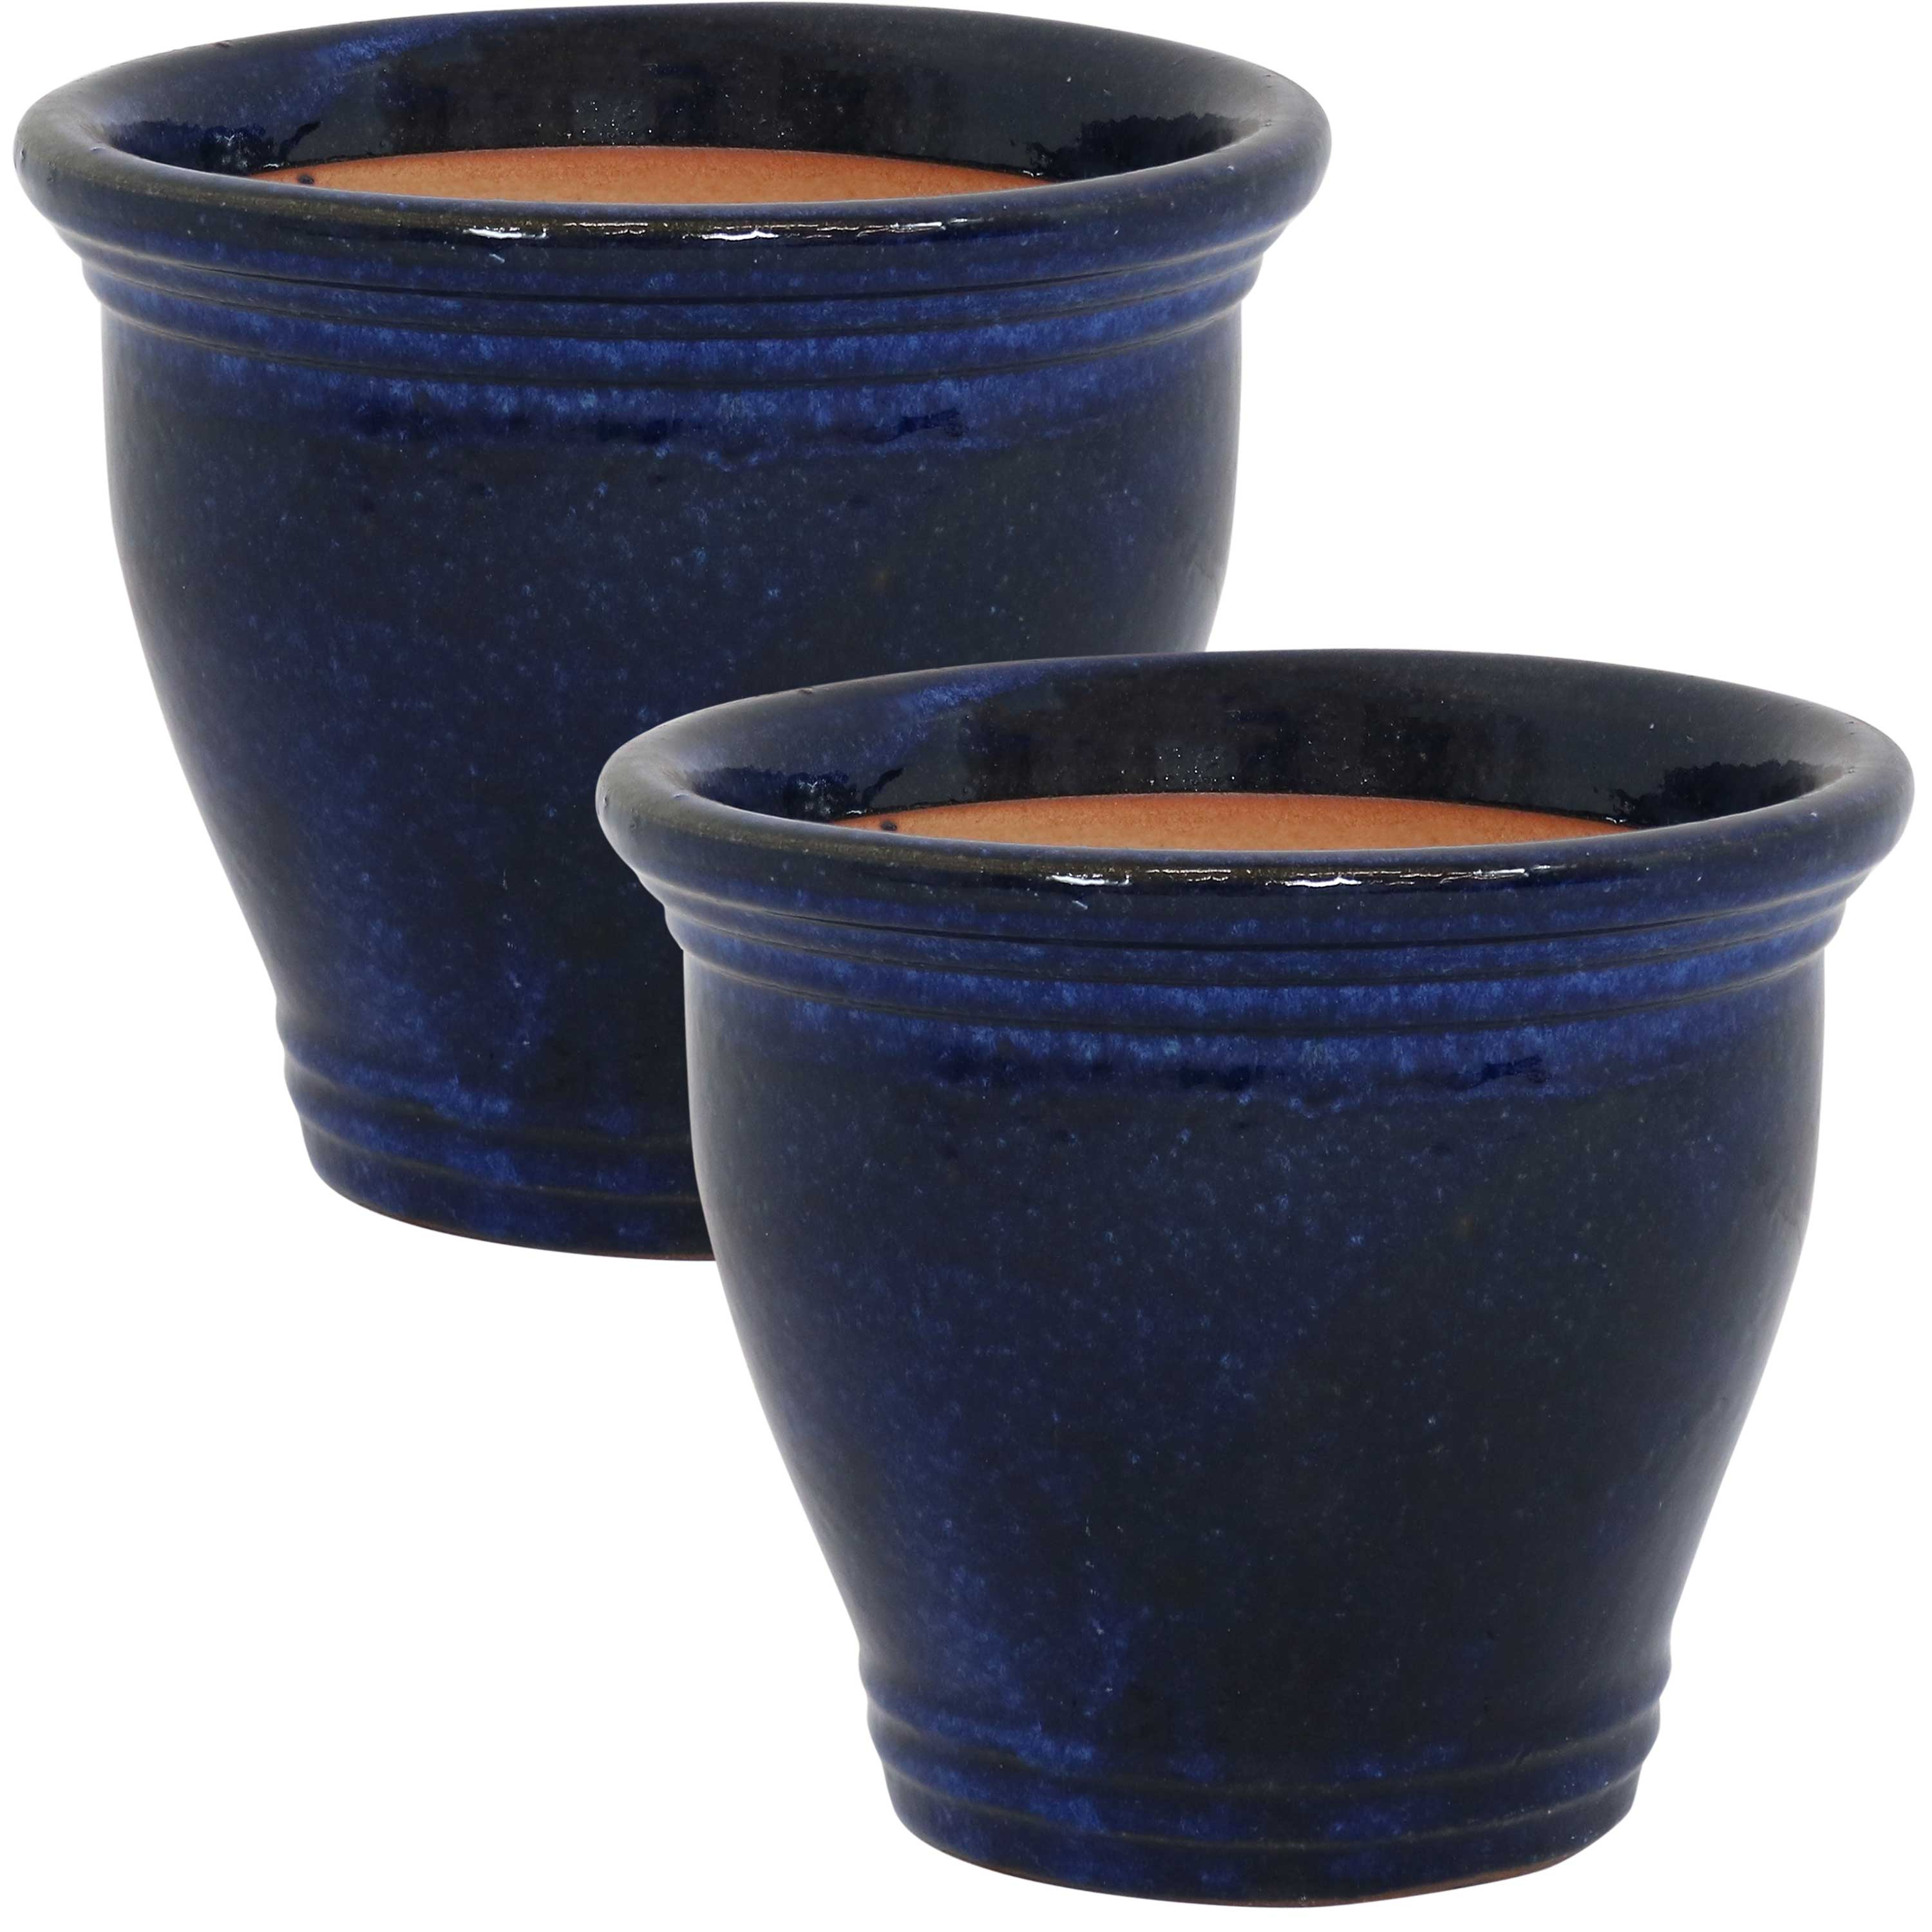 2 Studio Glazed Ceramic Planters - 11" - Imperial Blue